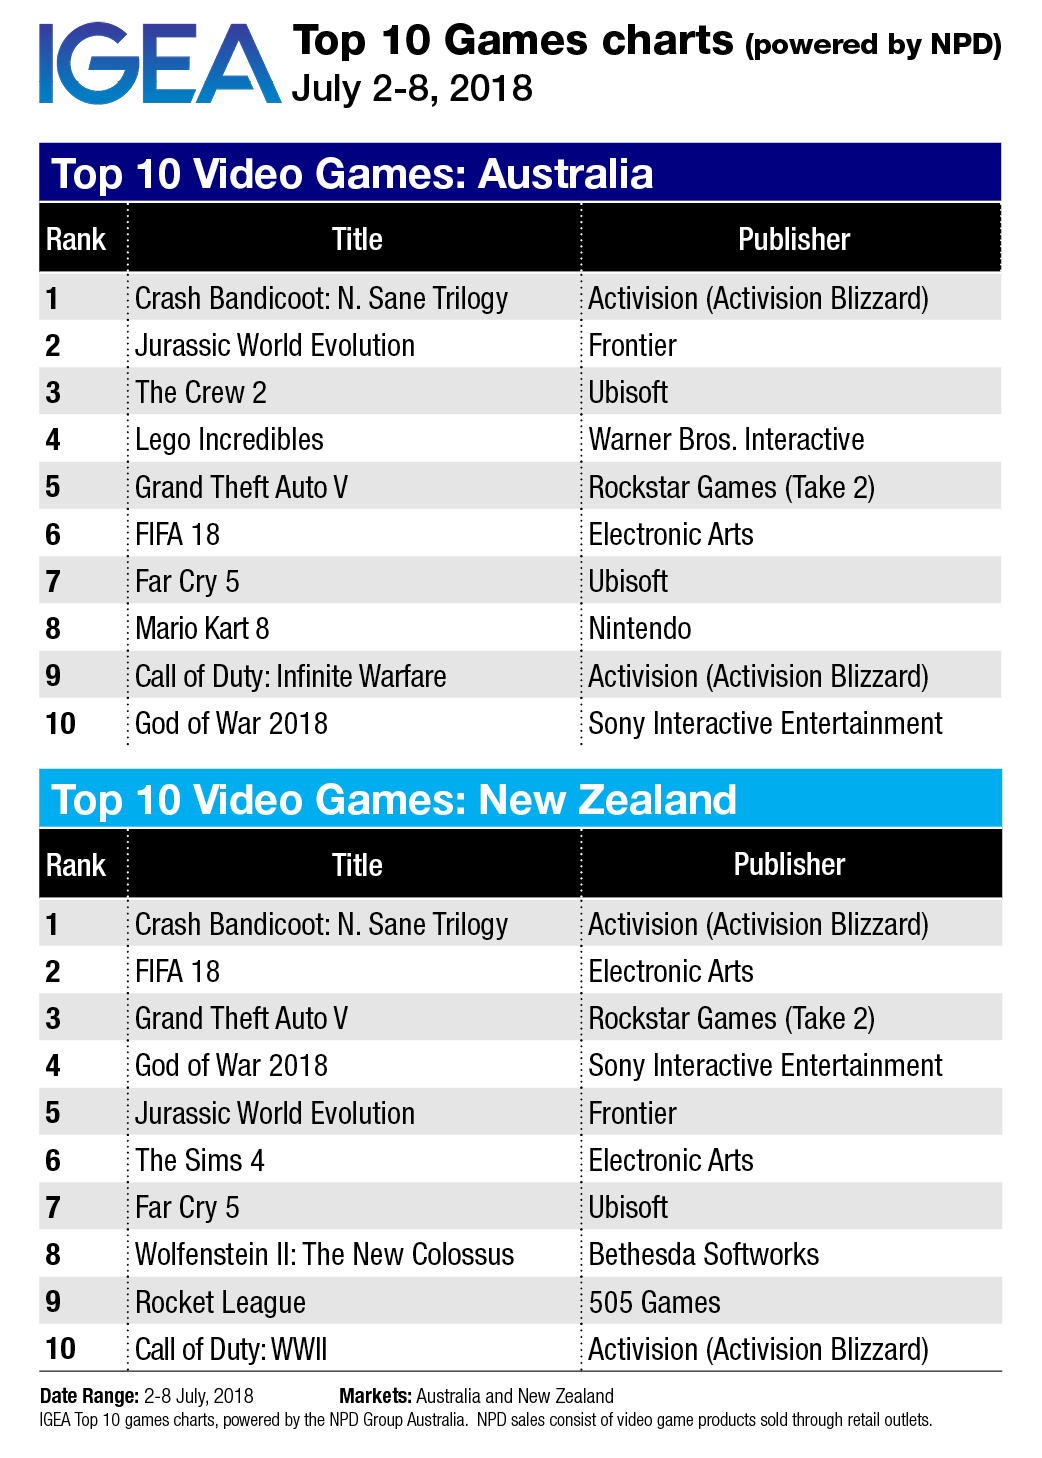 Top 10 Games Crash #1, Jurassic World hot on its heels - Mediaweek